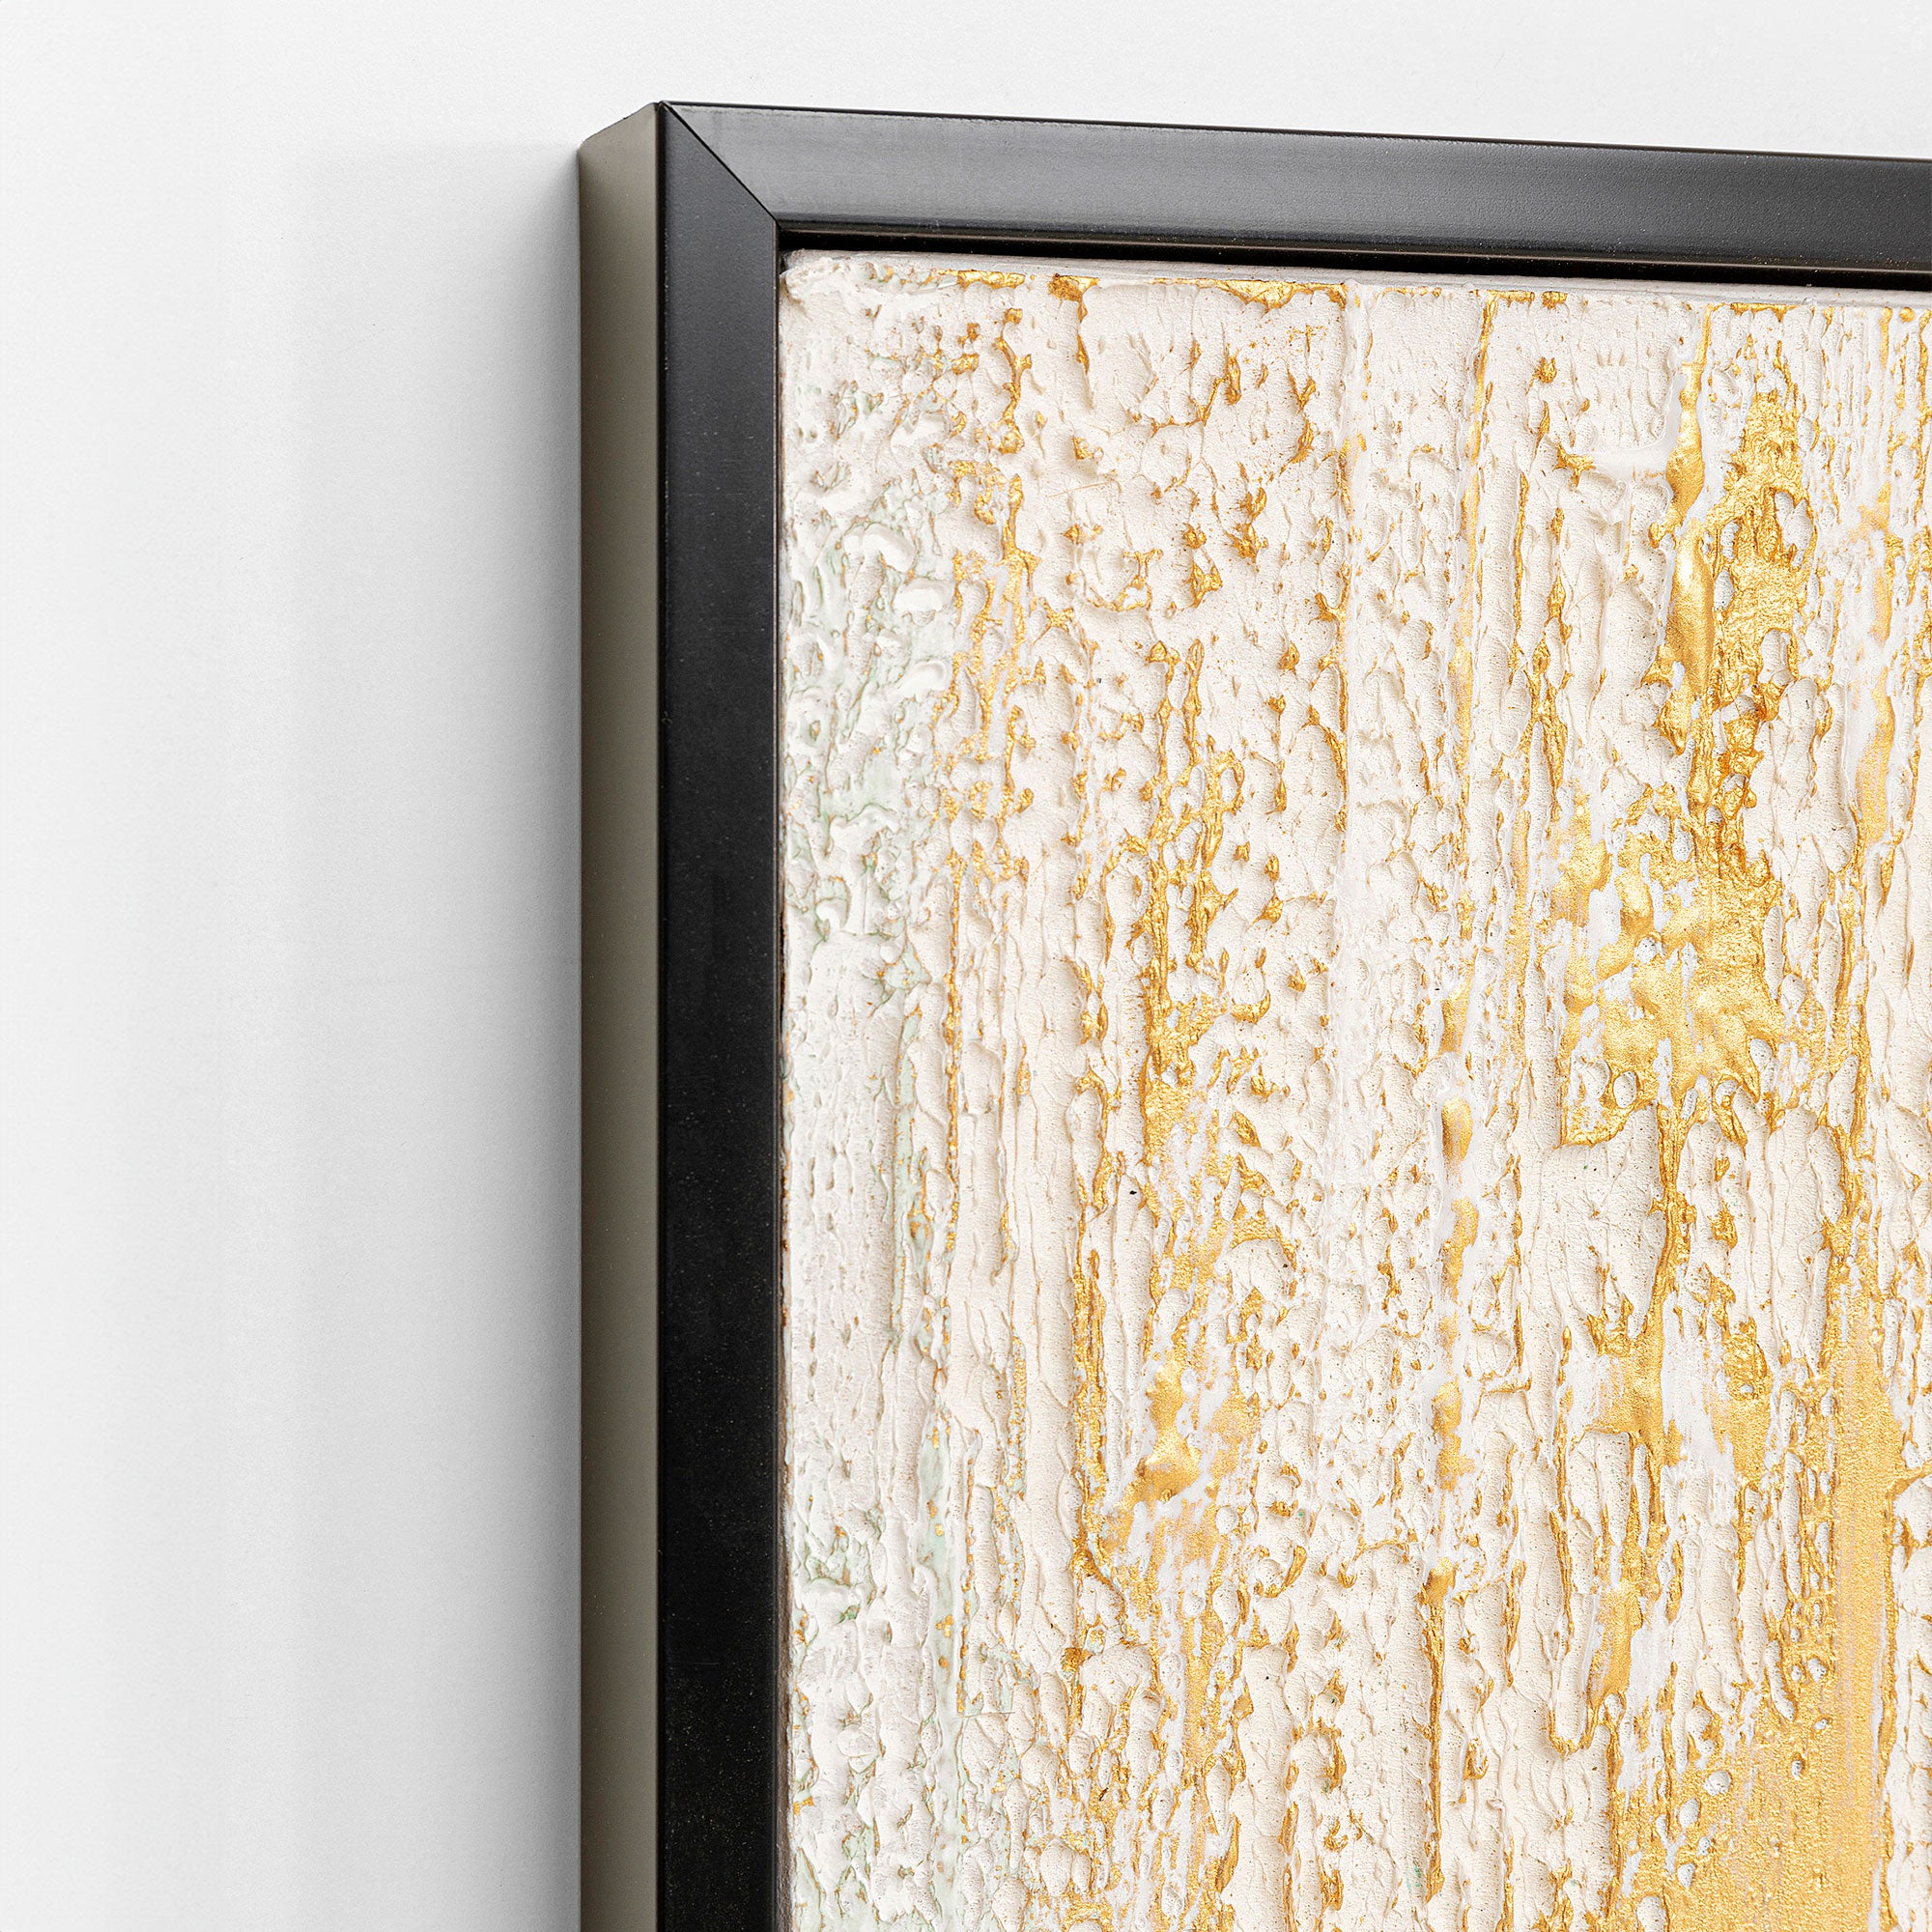 Brush of Gold on Black - Framed Canvas